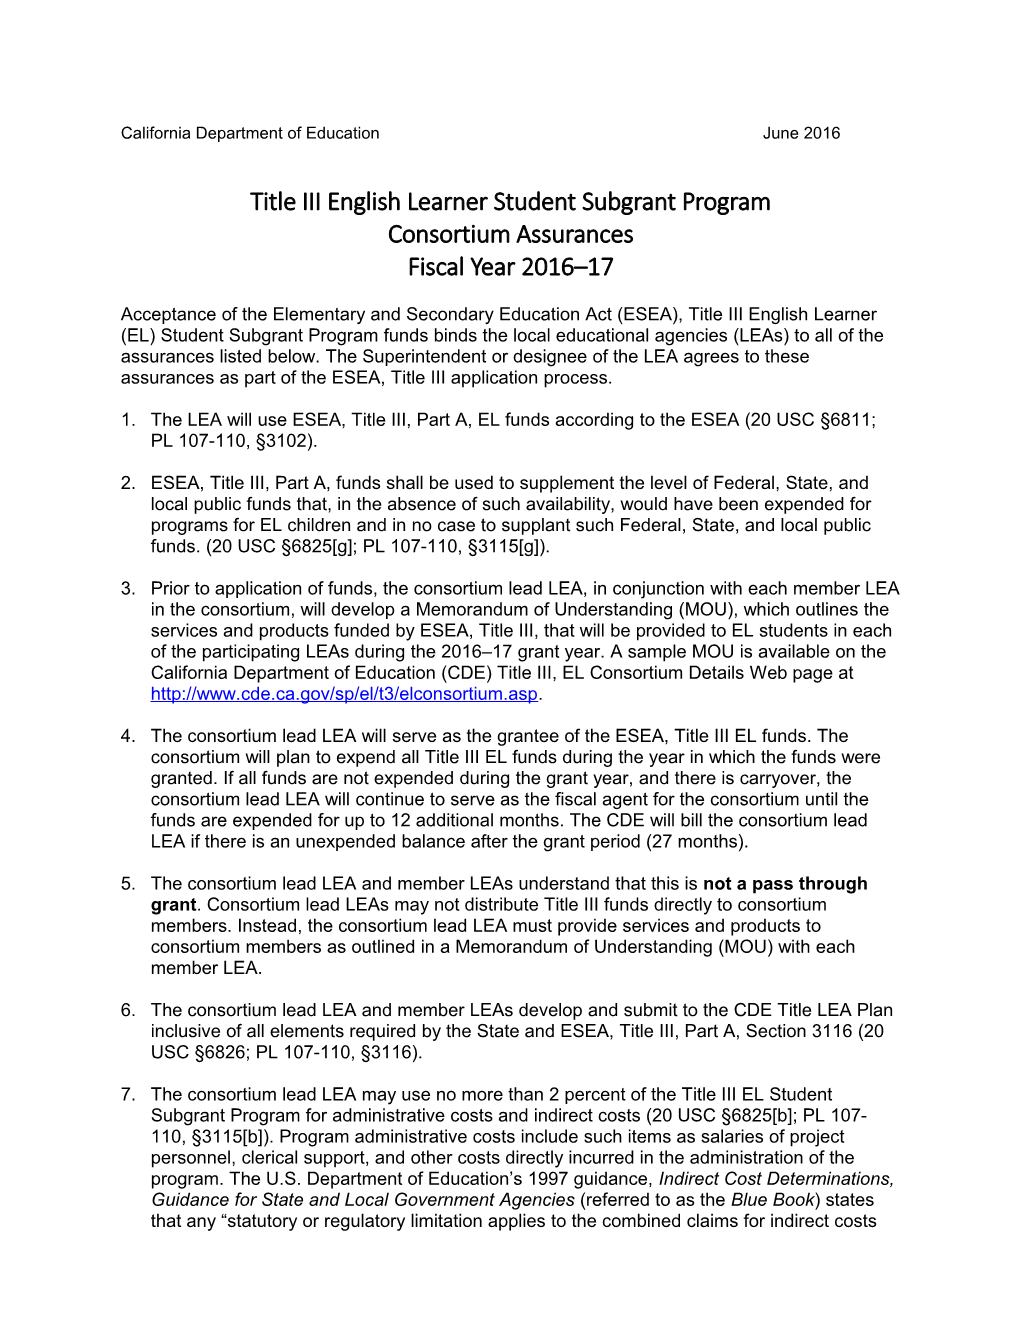 Att-16: Title III LEP Education Subgrant Program (CA Dept of Education)